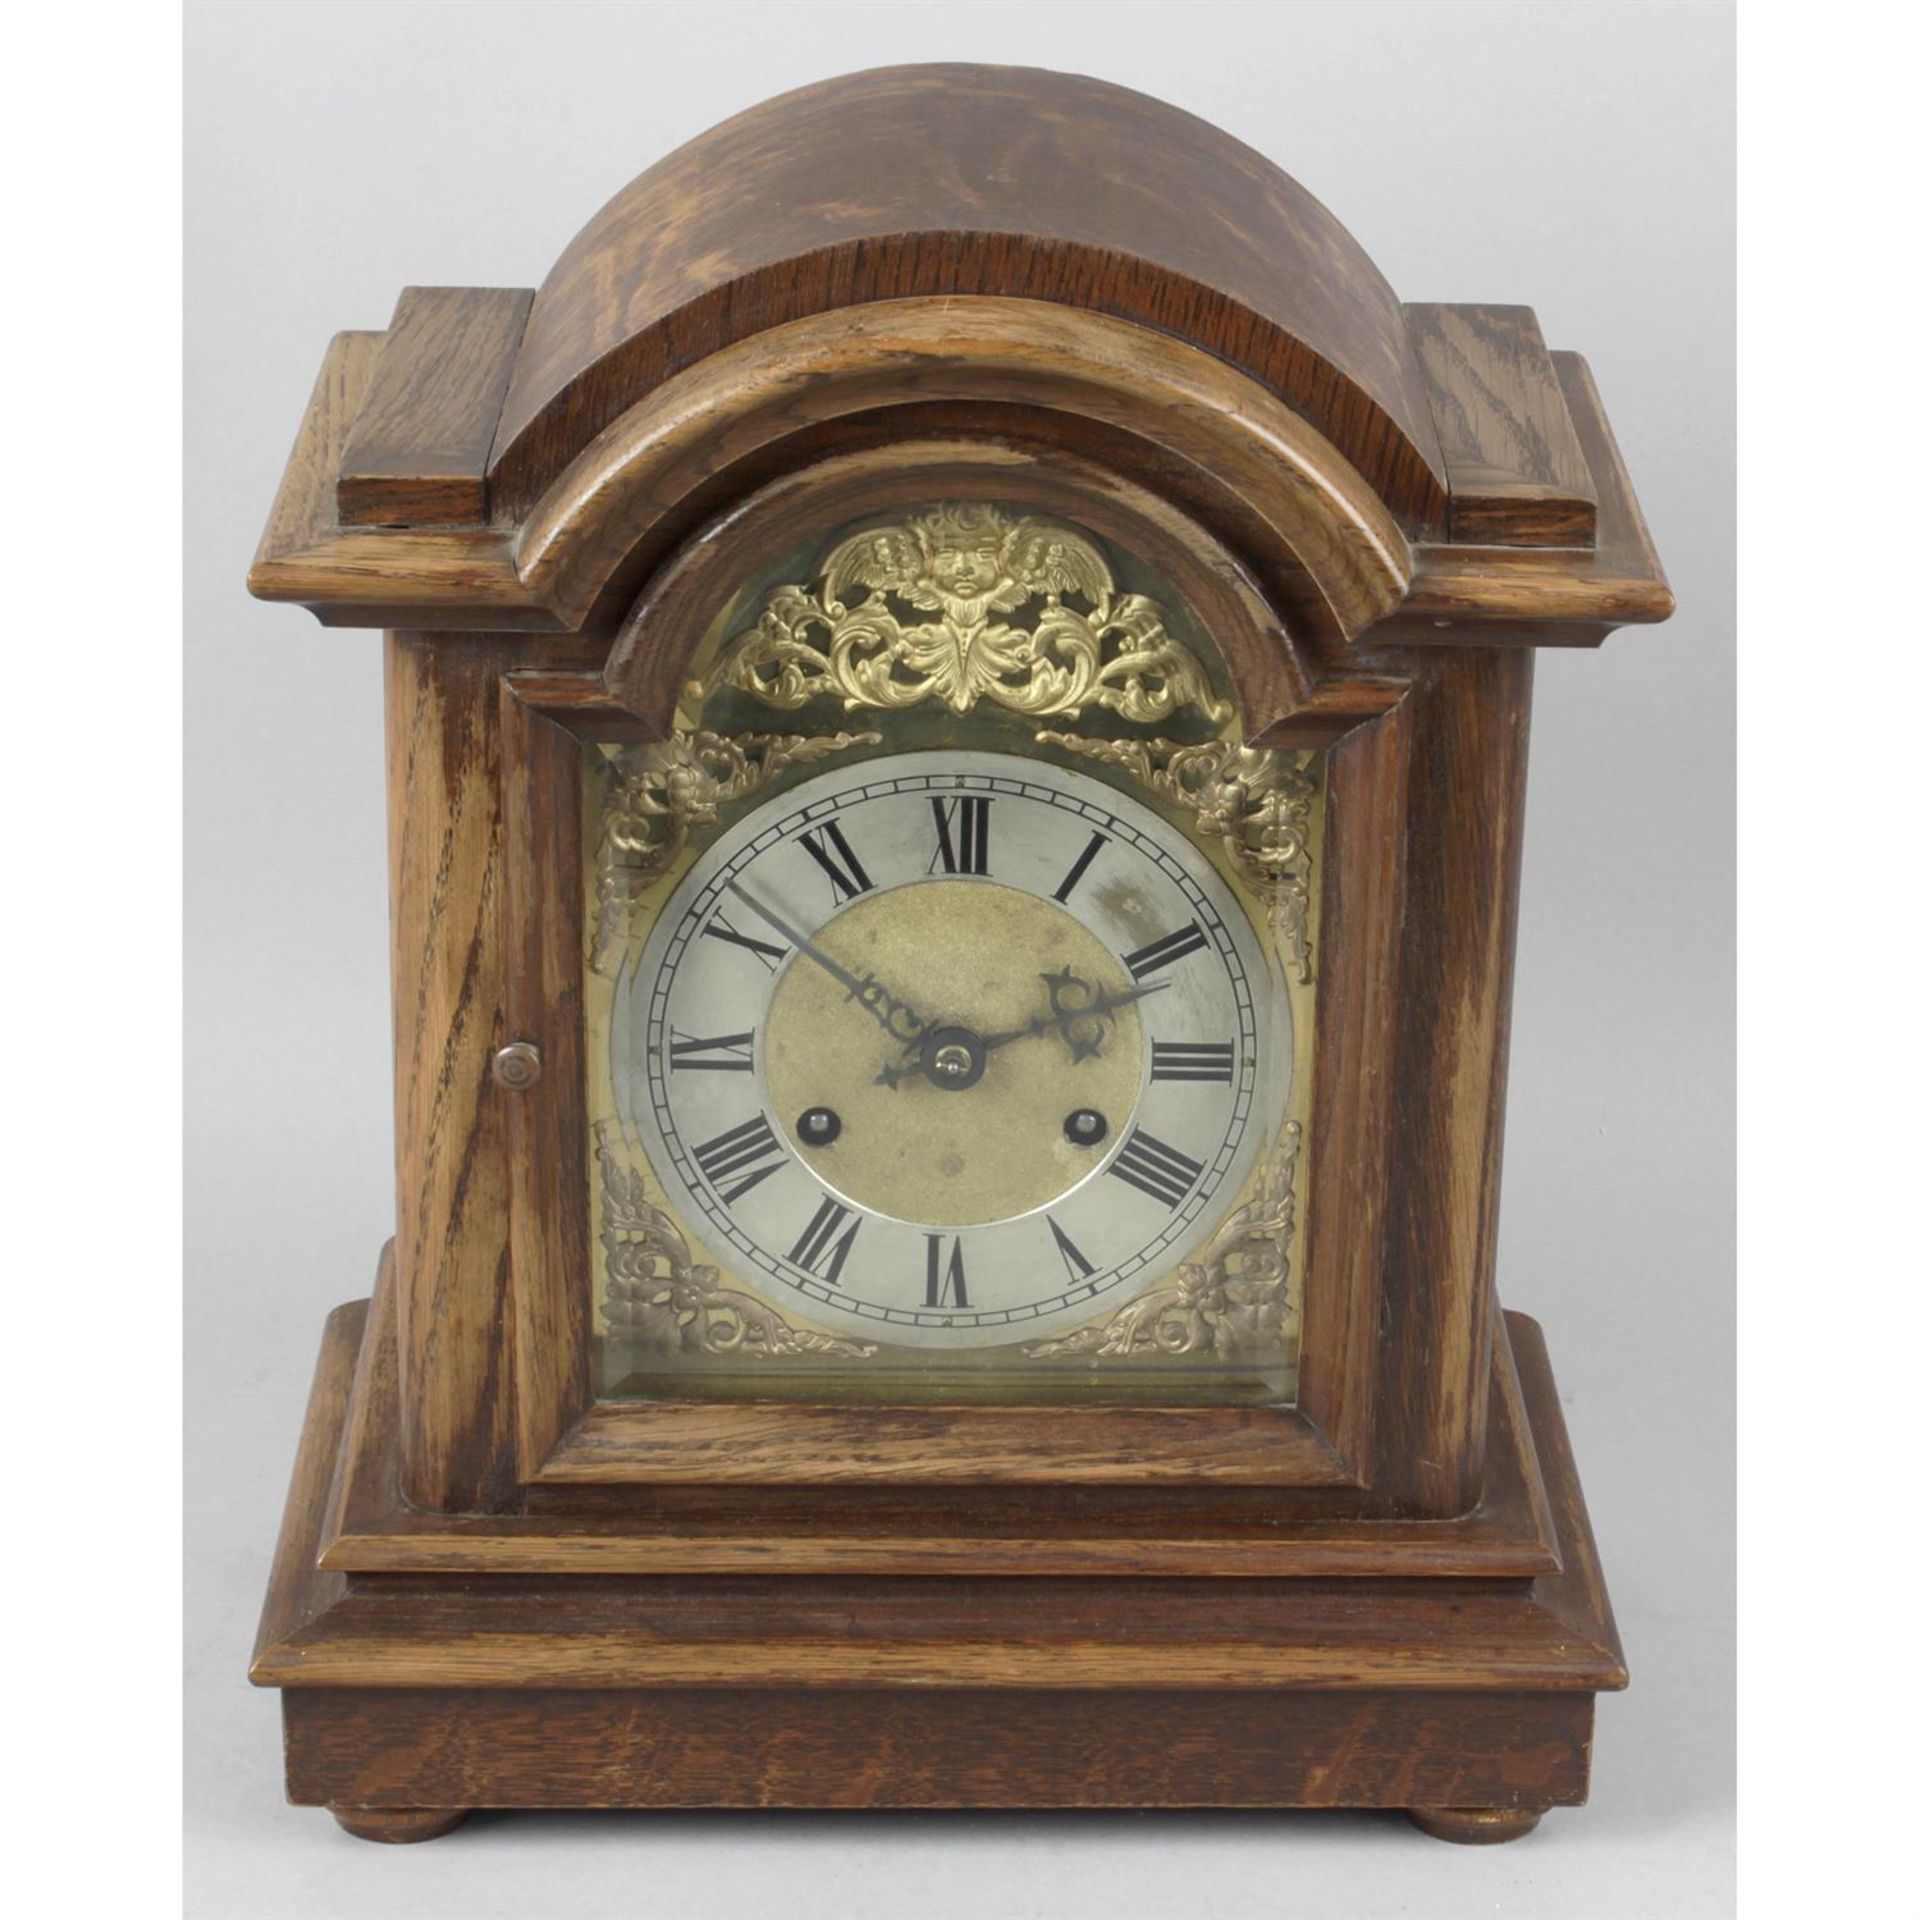 An early 20th century bracket style mantel clock.